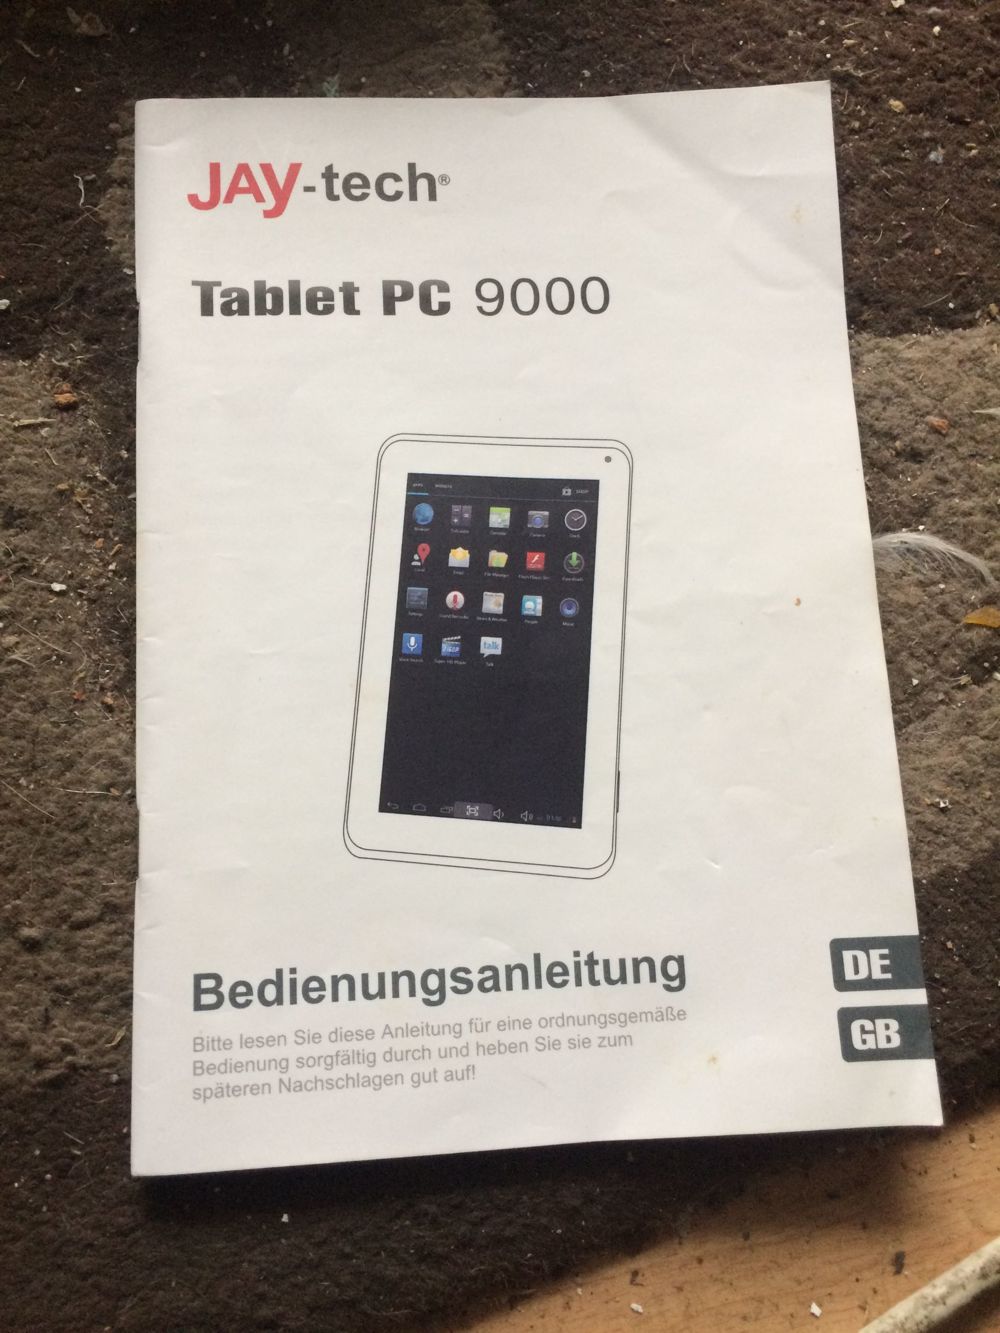 Jay-tech Tablet PC 9000    Preis 79.99